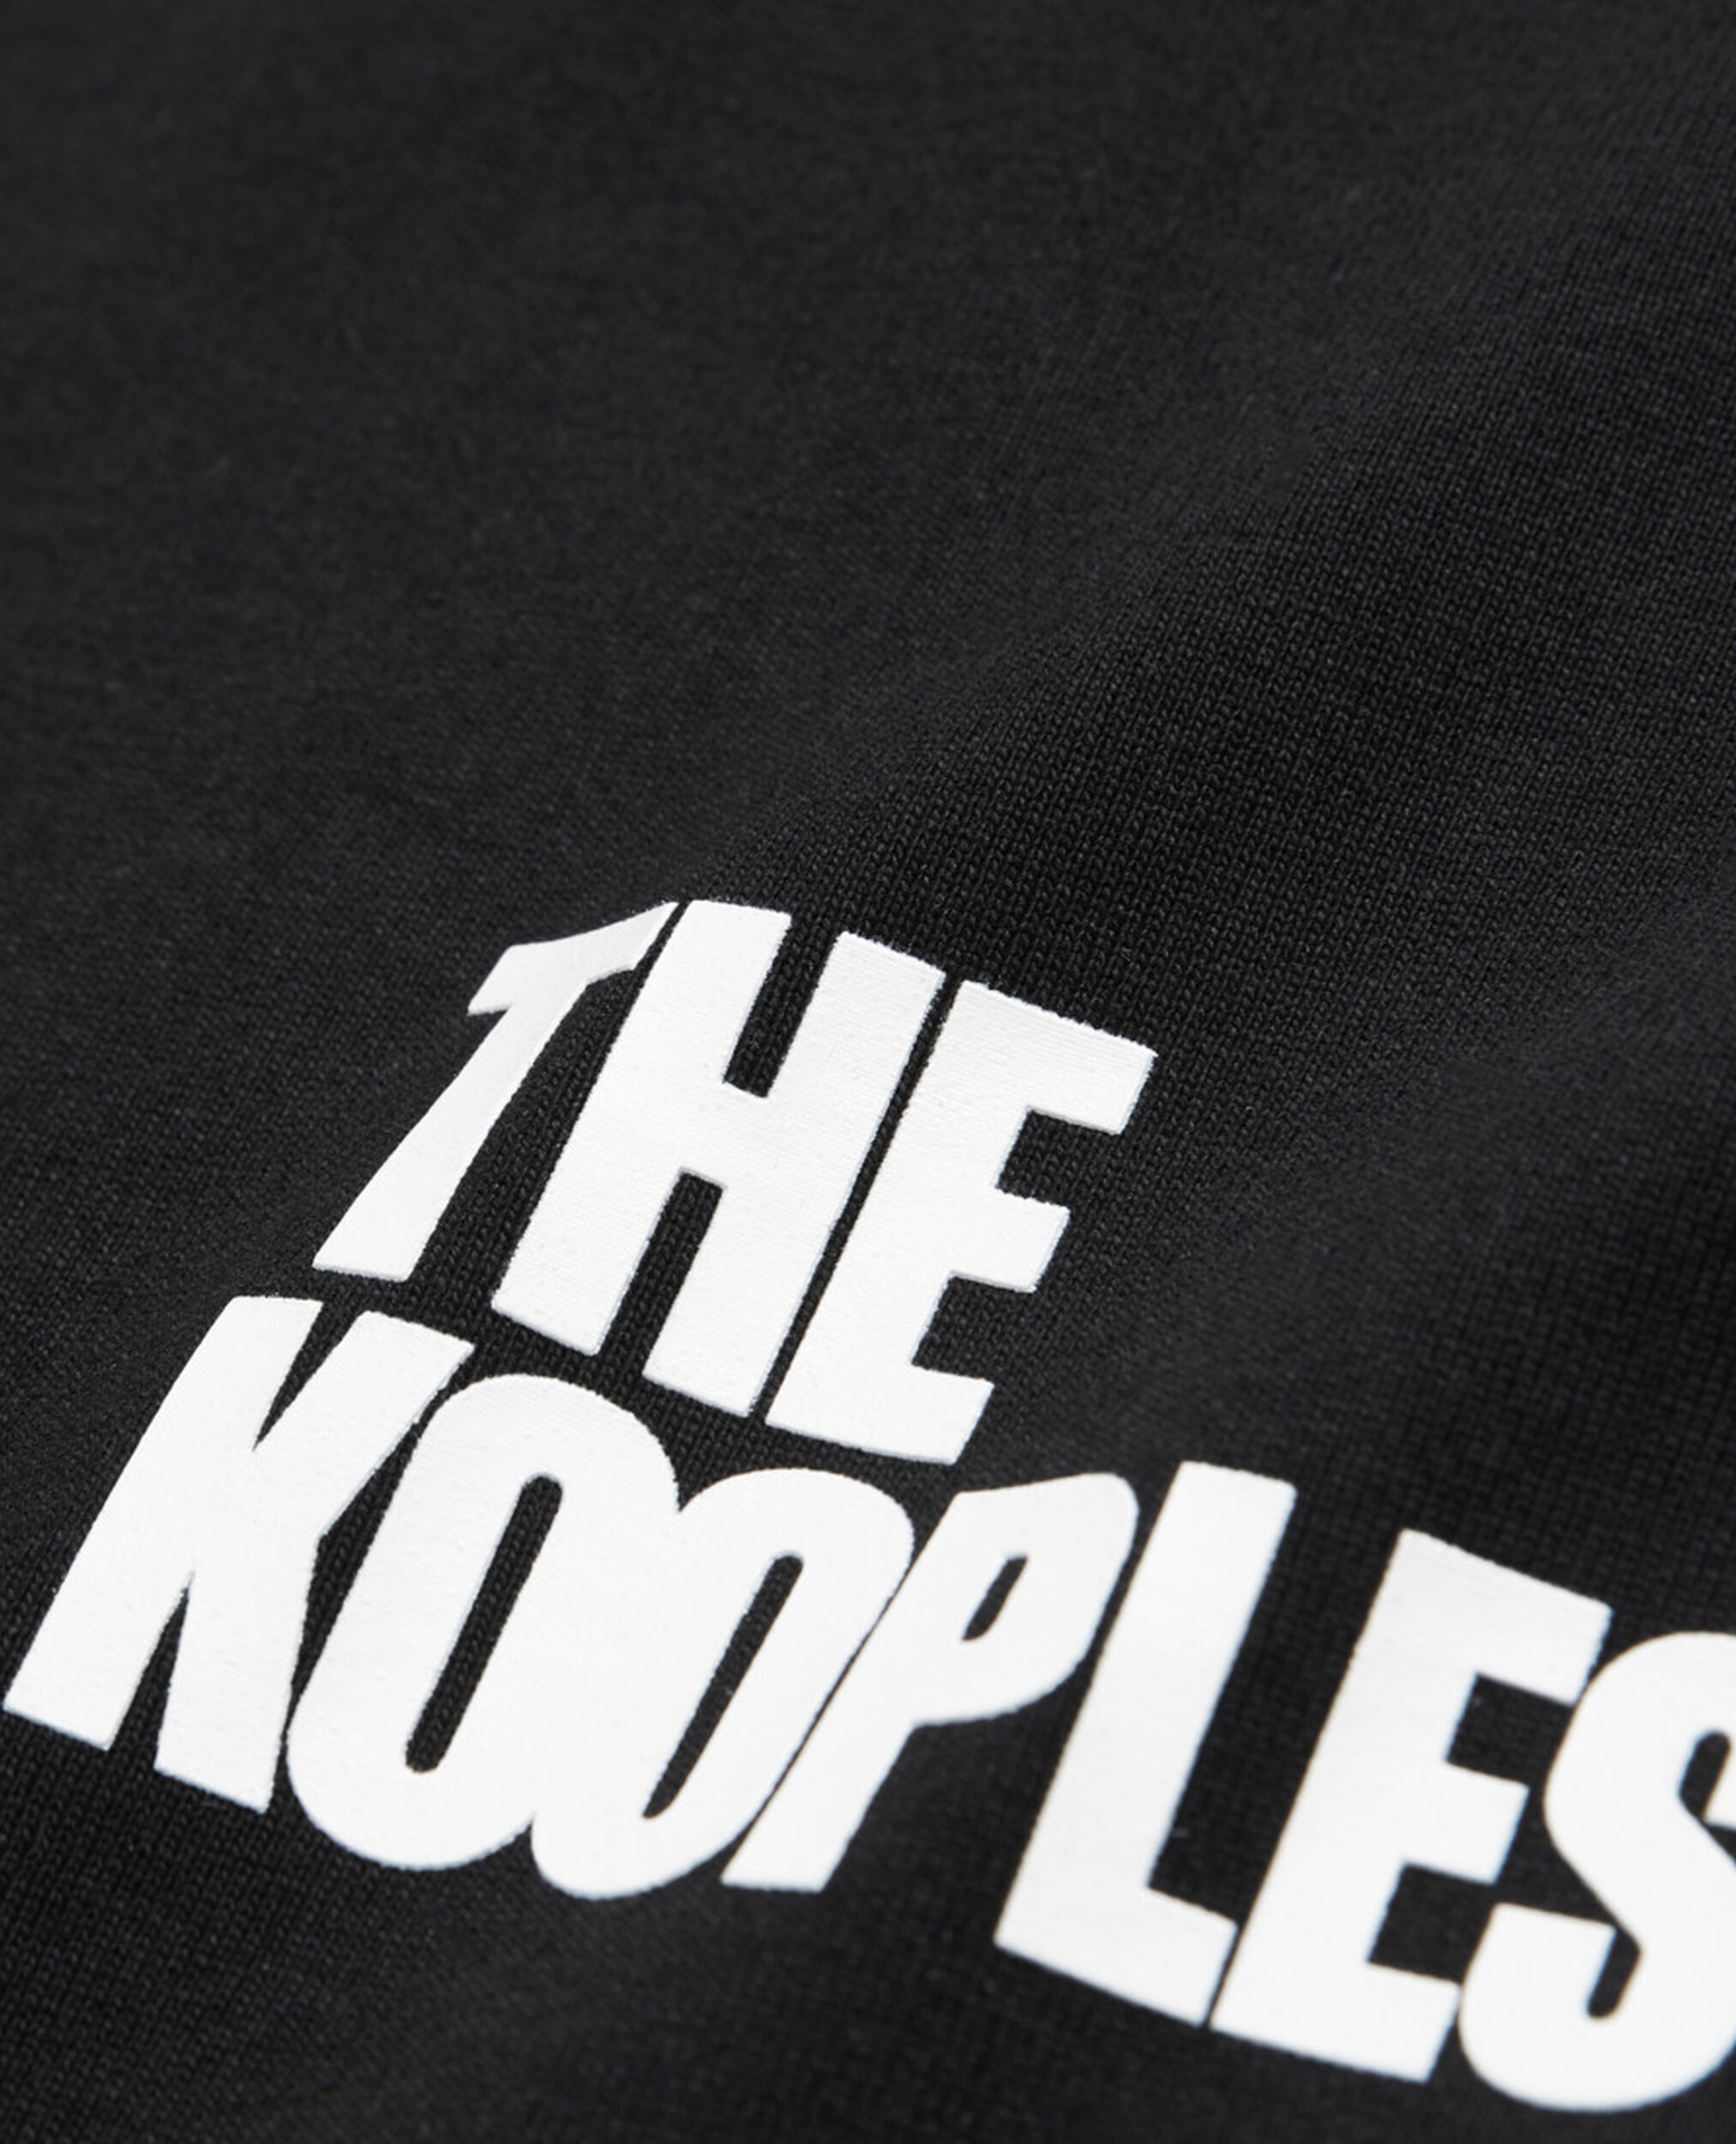 Camiseta logotipo The Kooples negra, BLACK, hi-res image number null